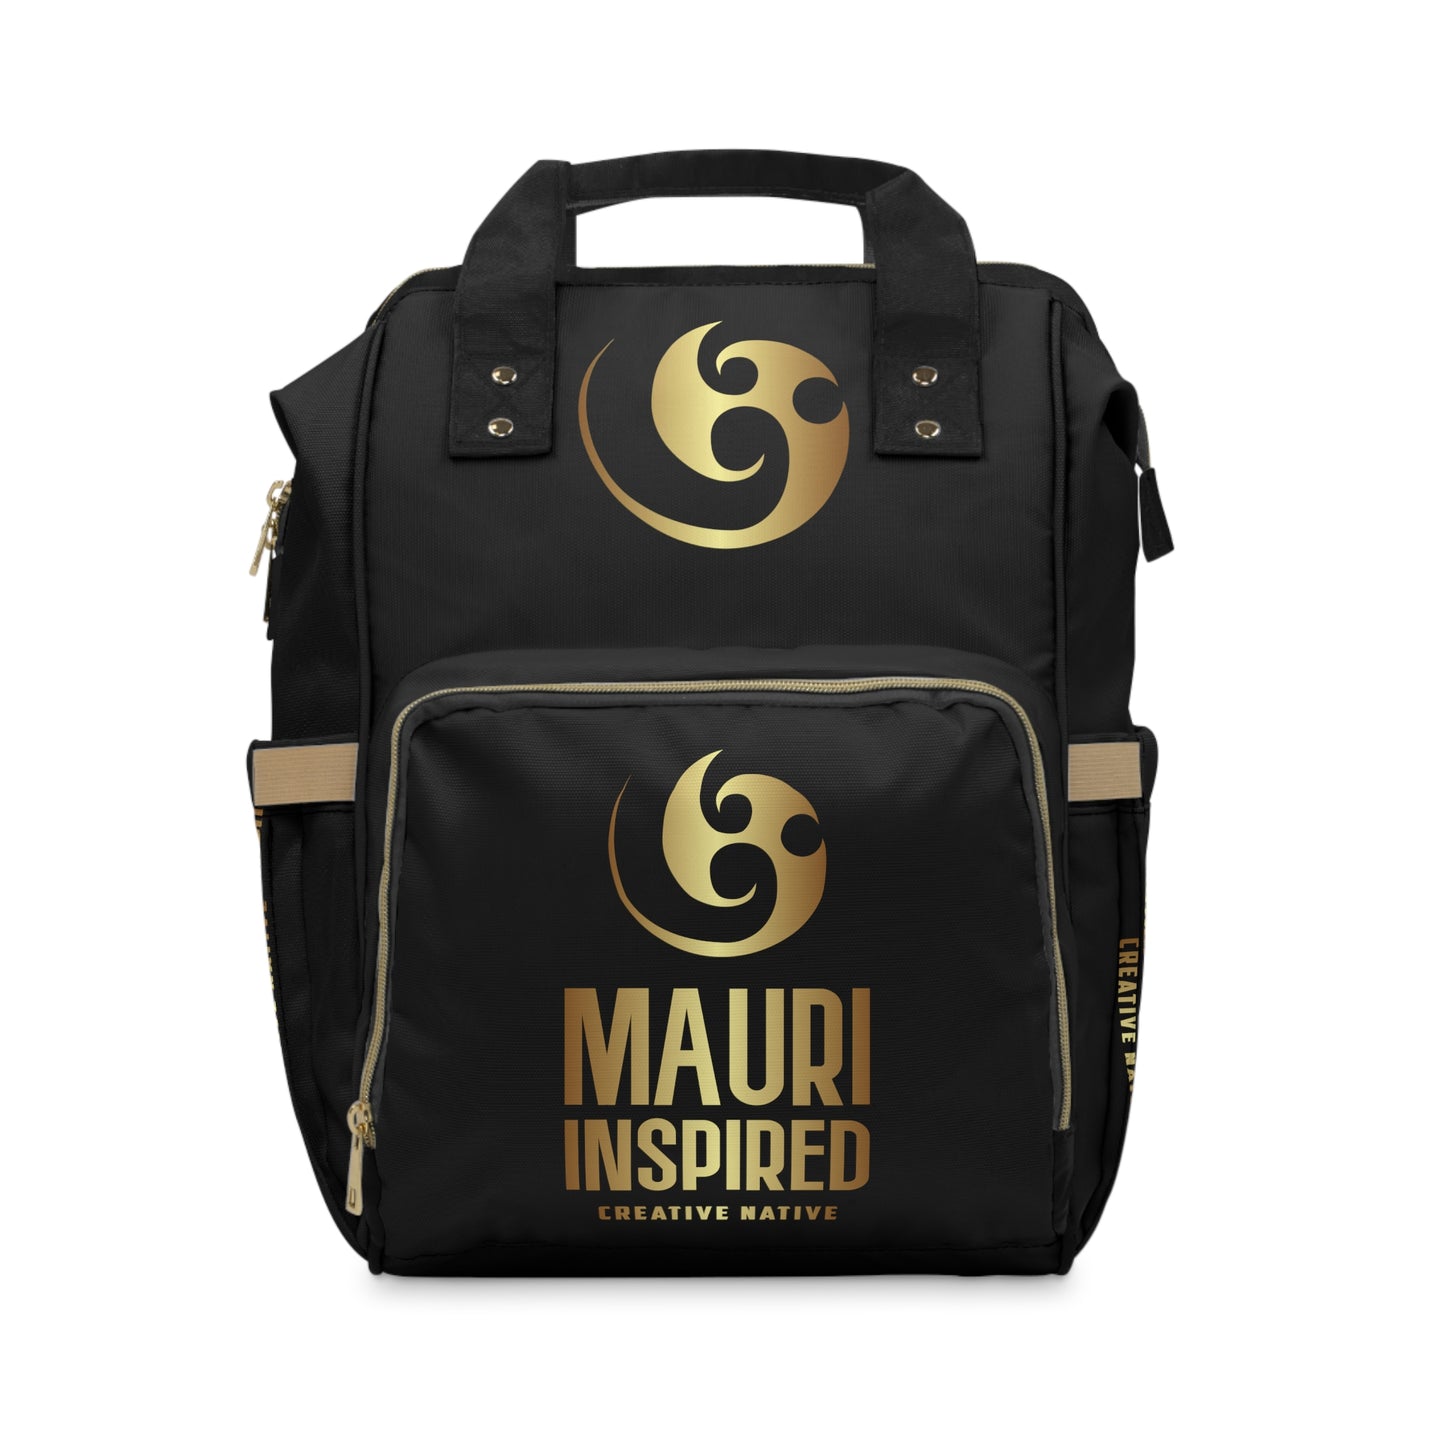 Mauri Inspired - Multifunctional Diaper Backpack